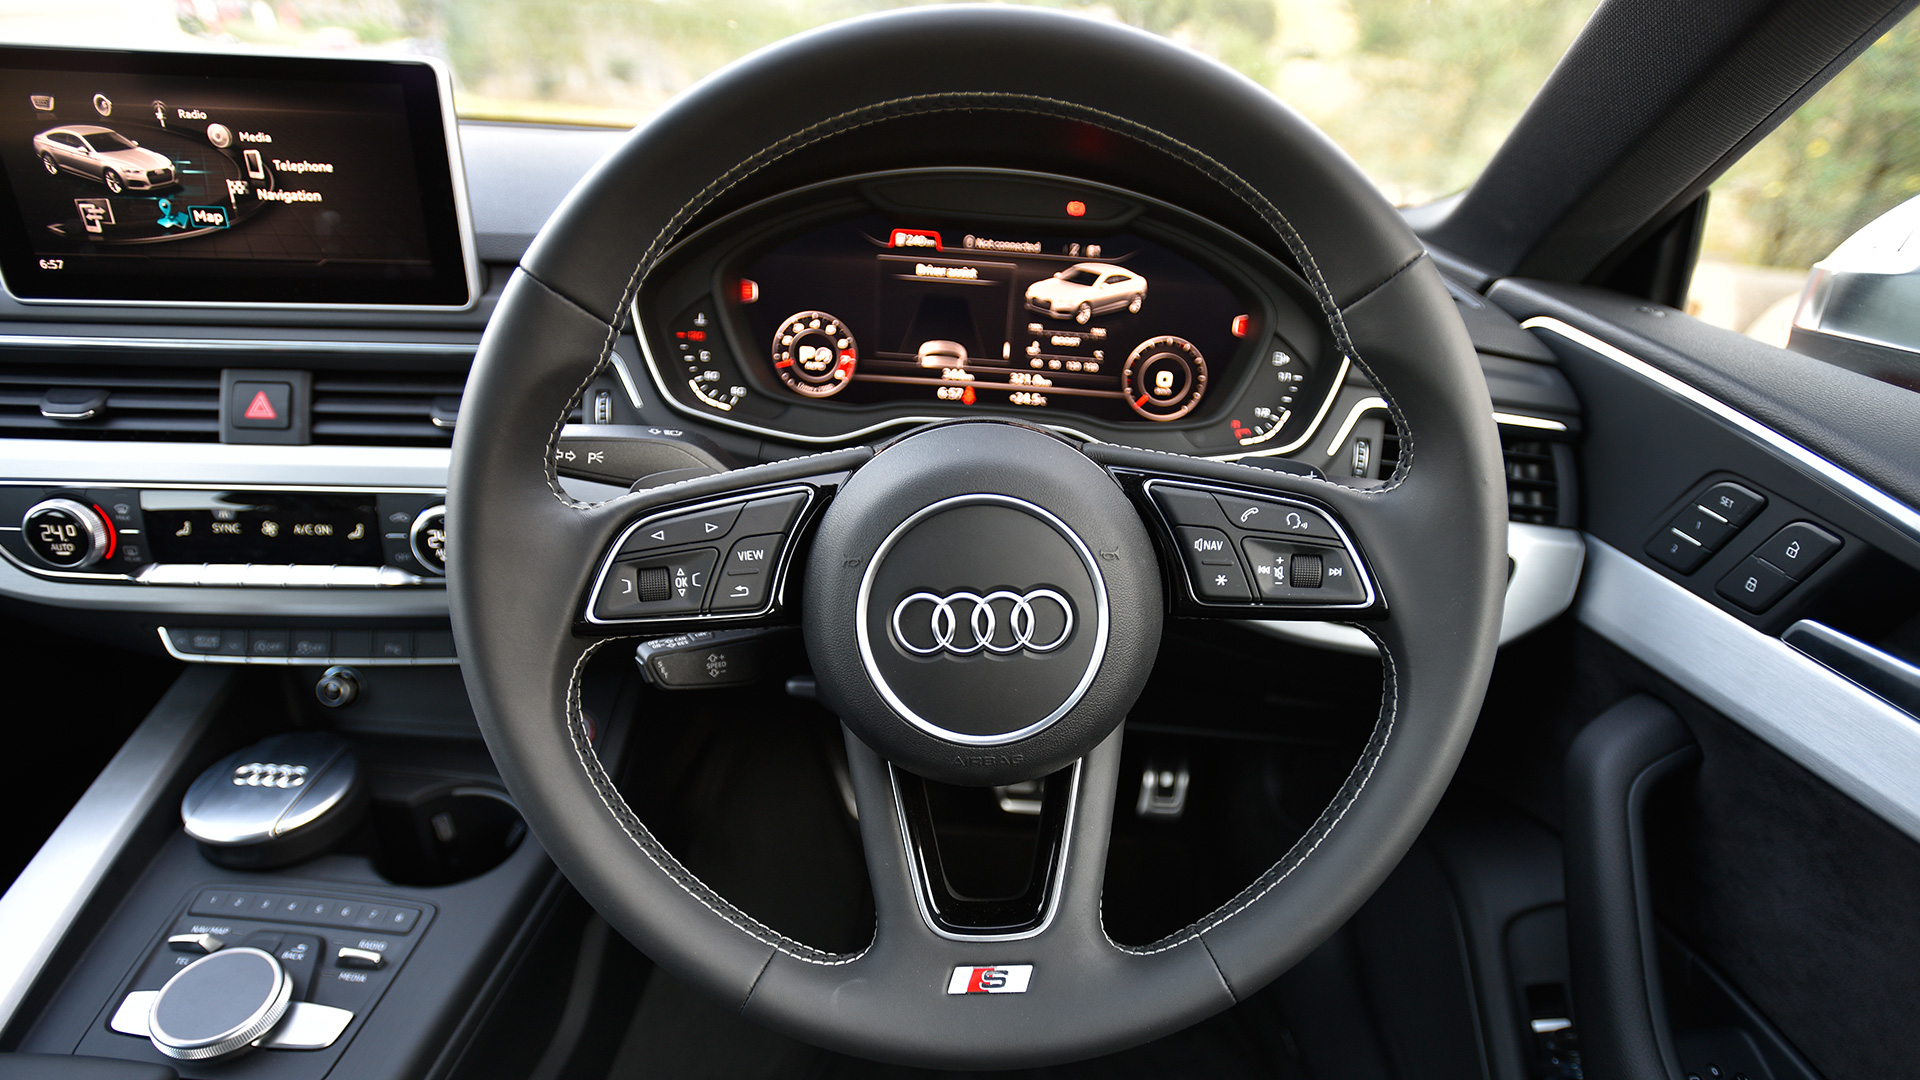 Audi S5 Sportback 2017 Std Interior Car Photos Overdrive